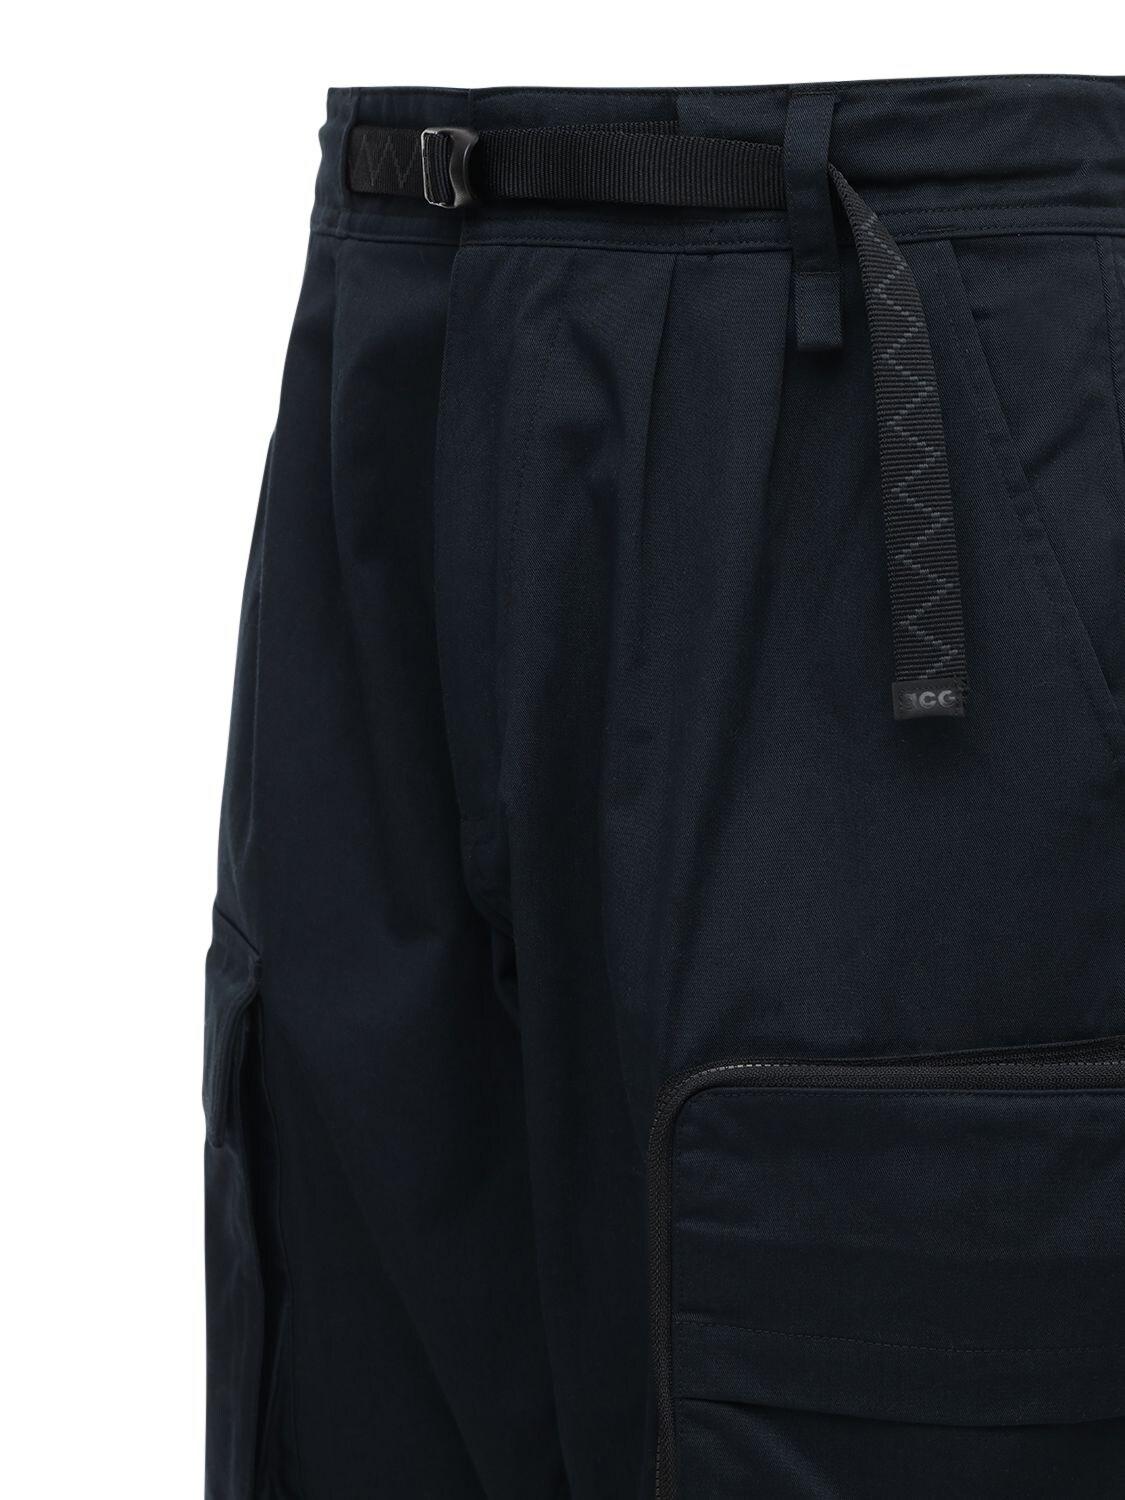 Nike Acg Woven Cotton Blend Cargo Pants in Black for Men - Lyst